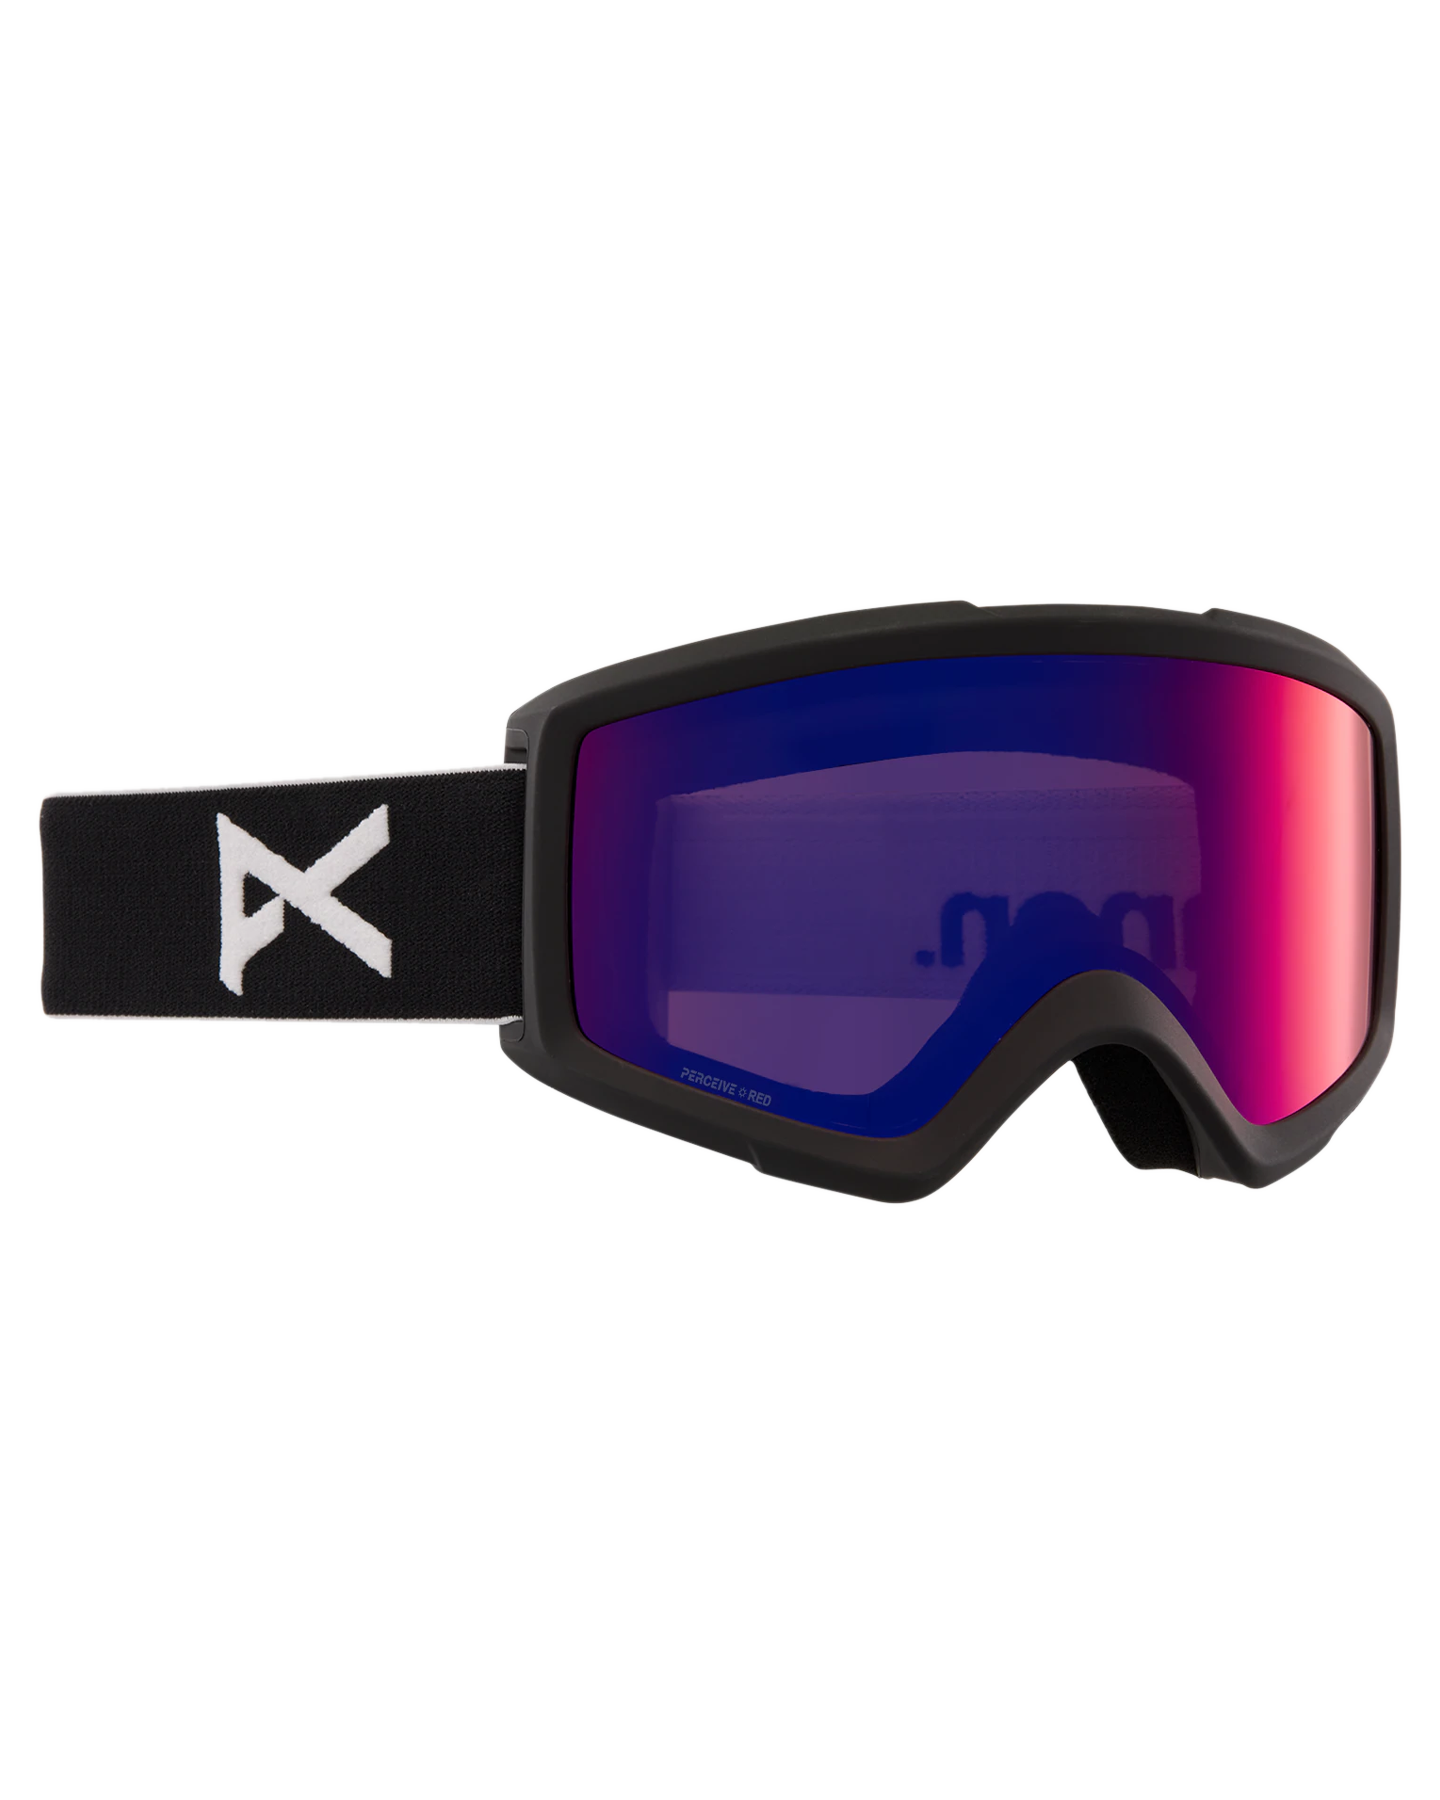 Anon Helix 2.0 Snow Goggles + Bonus Lens - Black/Perceive Sunny Red Lens Men's Snow Goggles - Trojan Wake Ski Snow